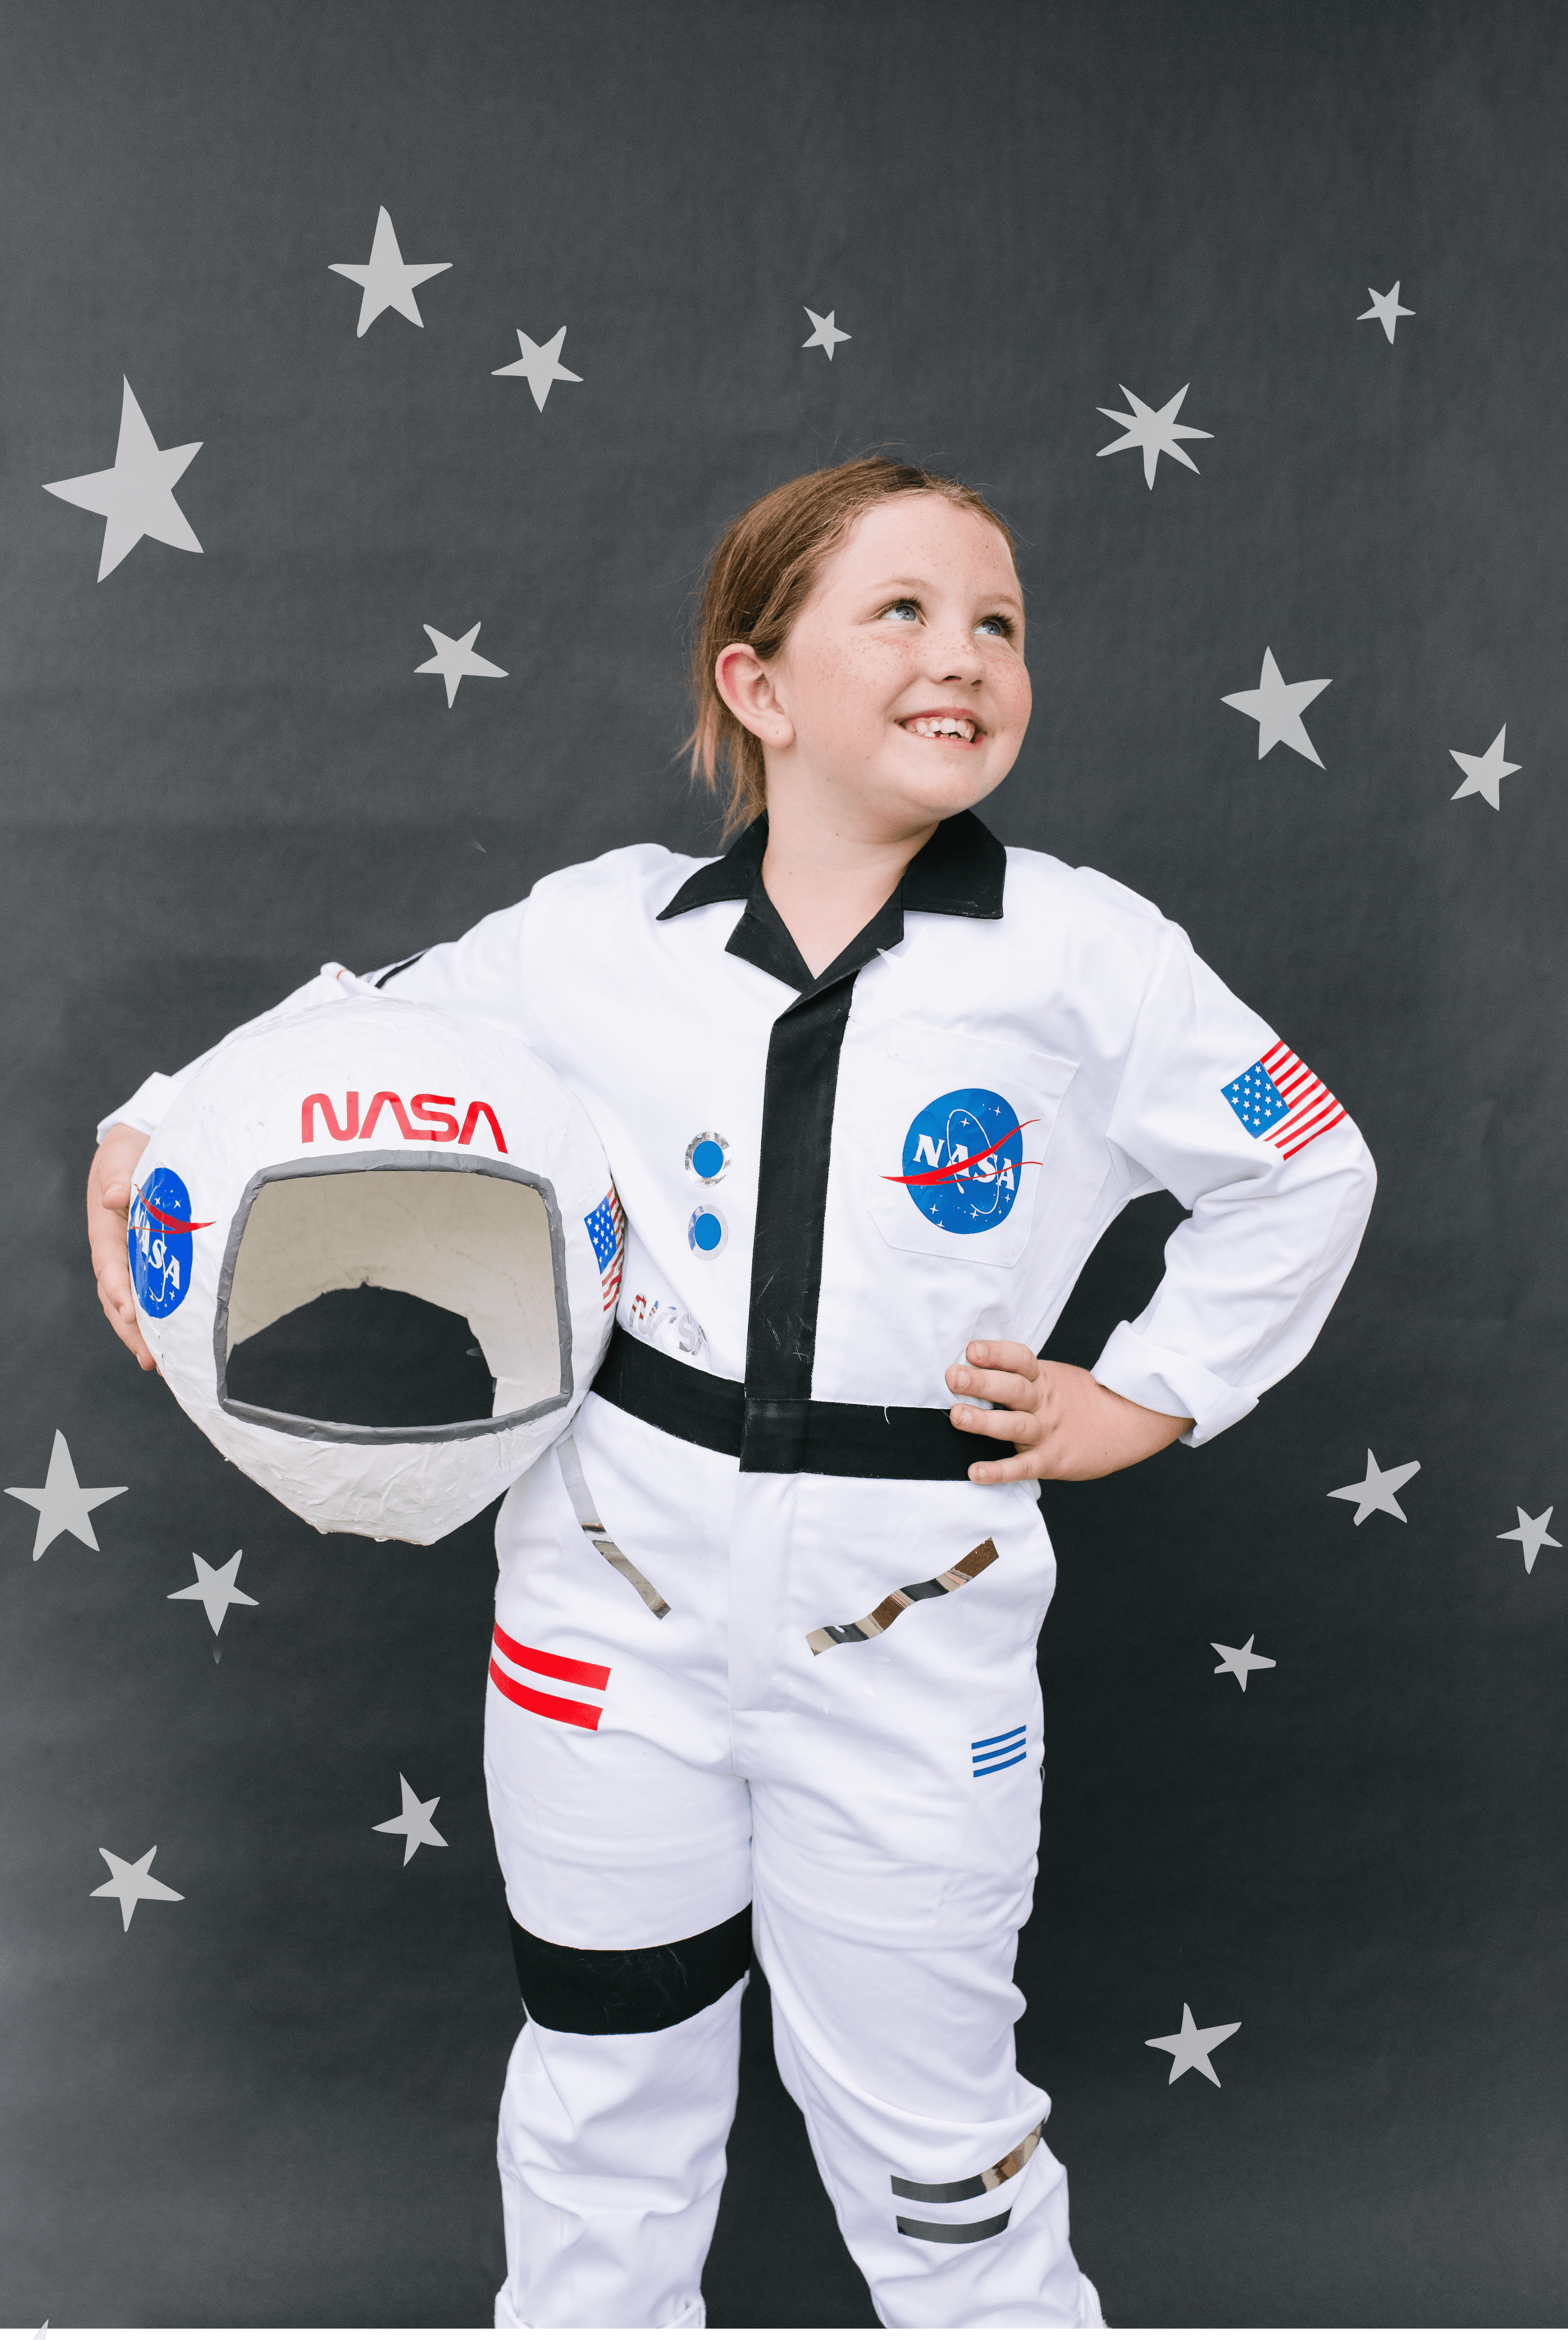 DIY Astronaut Costume for Halloween